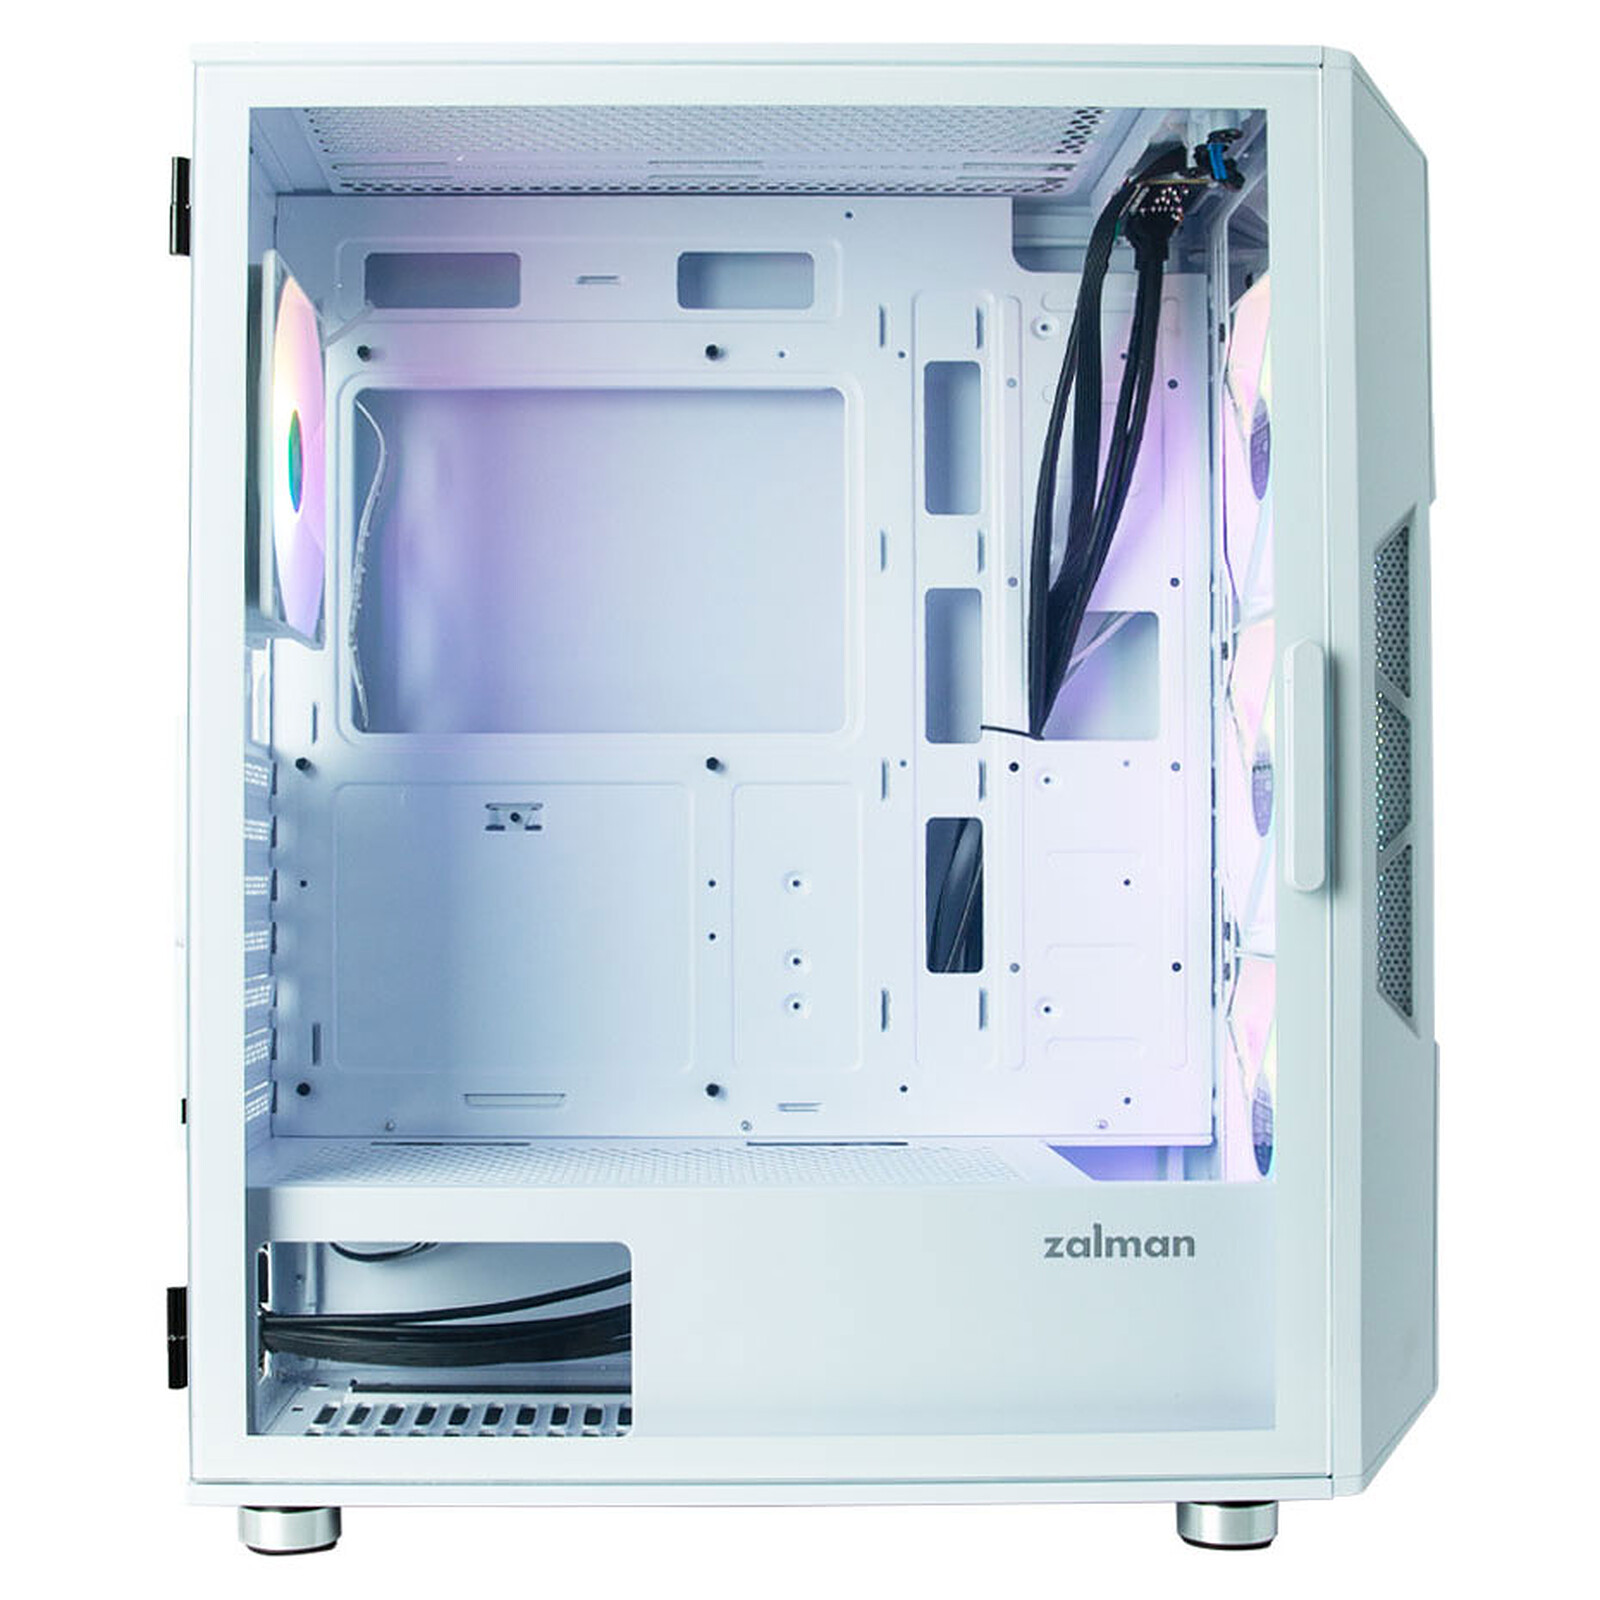 Hyte Y60 (Blanc) - Boîtier PC - Garantie 3 ans LDLC